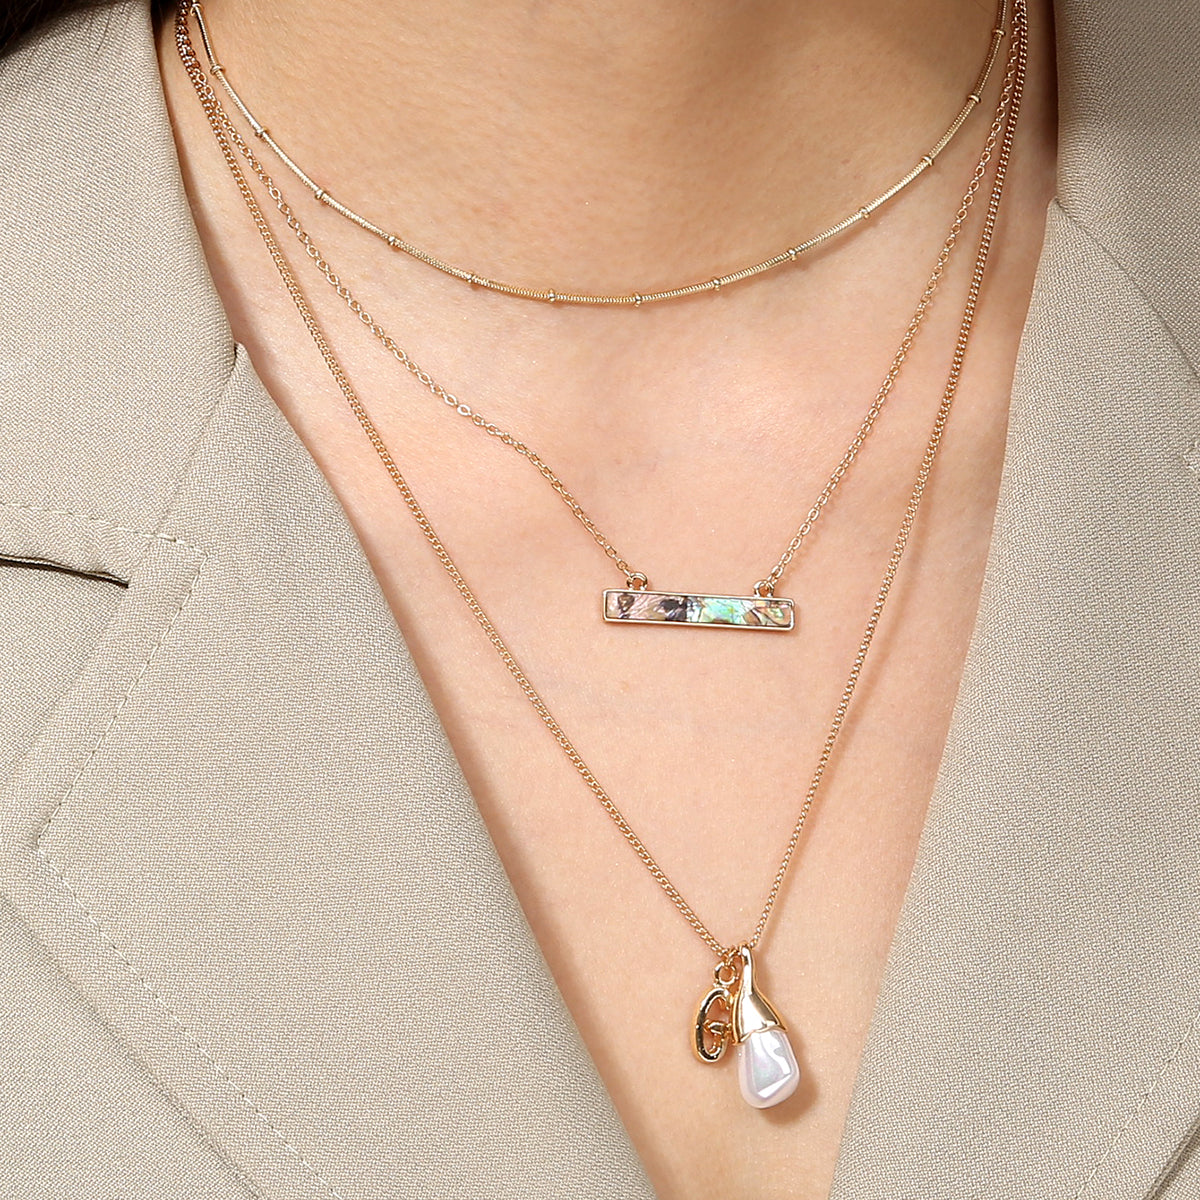 Elegant Lady Geometric Moon Copper Copper Alloy Wholesale Layered Necklaces